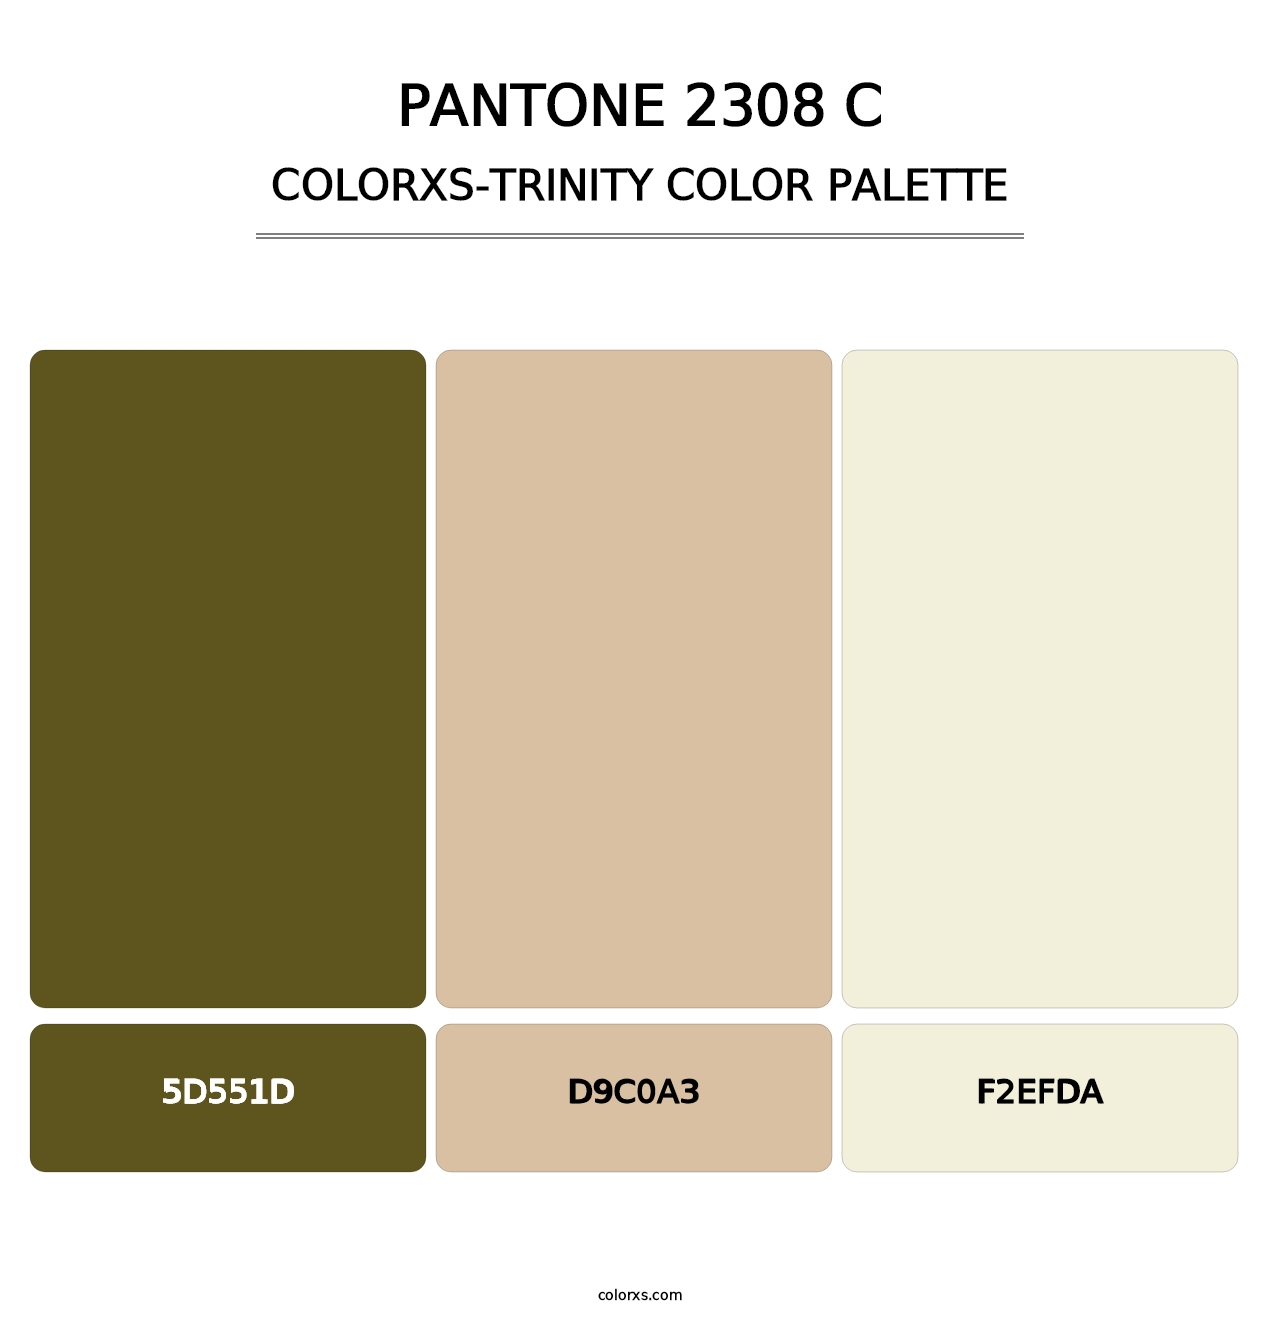 PANTONE 2308 C - Colorxs Trinity Palette